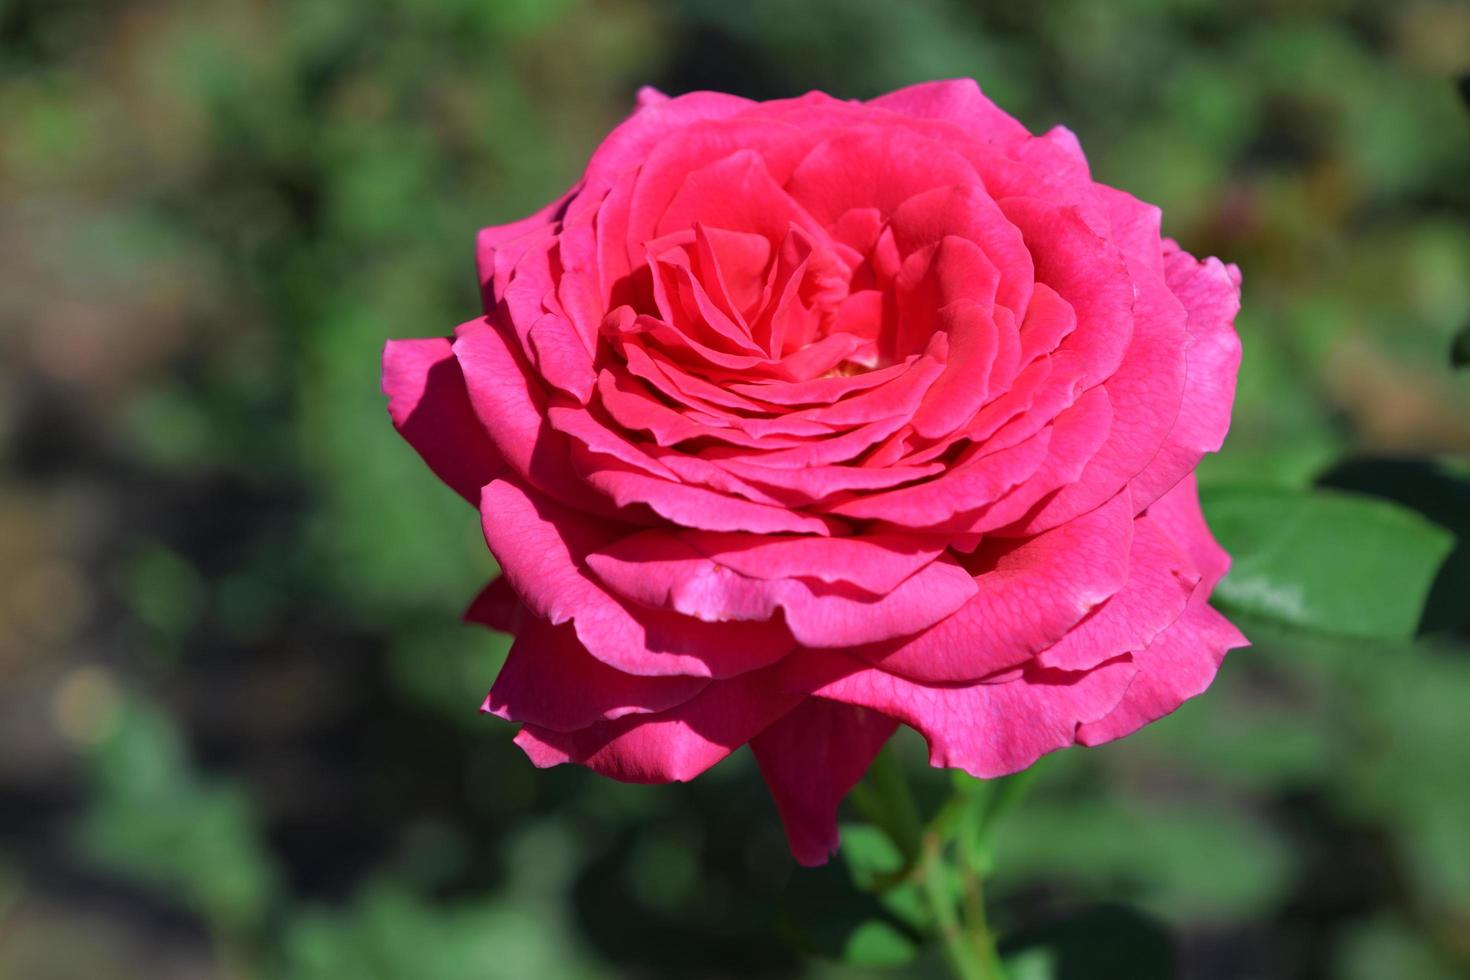 belle, scarlatte e rosse, grandi rose in fiore in un'aiuola foto